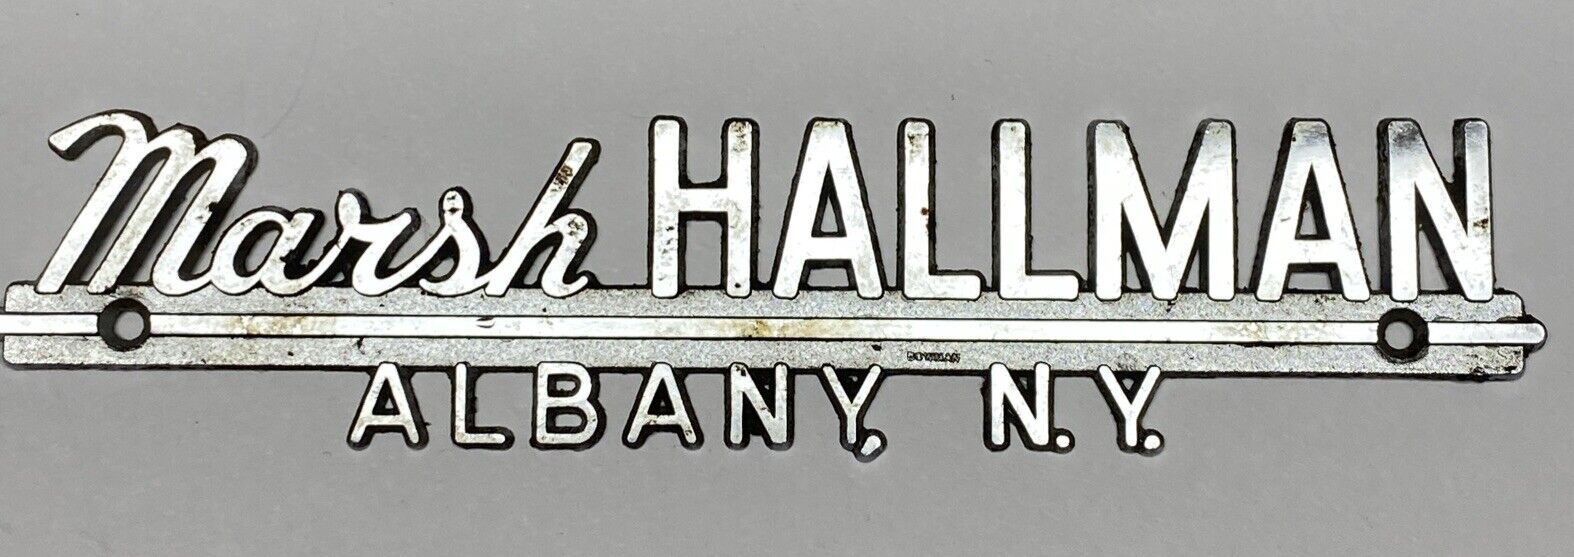 Vintage car emblem Badge, Marsh Hallman Albany, New York Dealership Nos